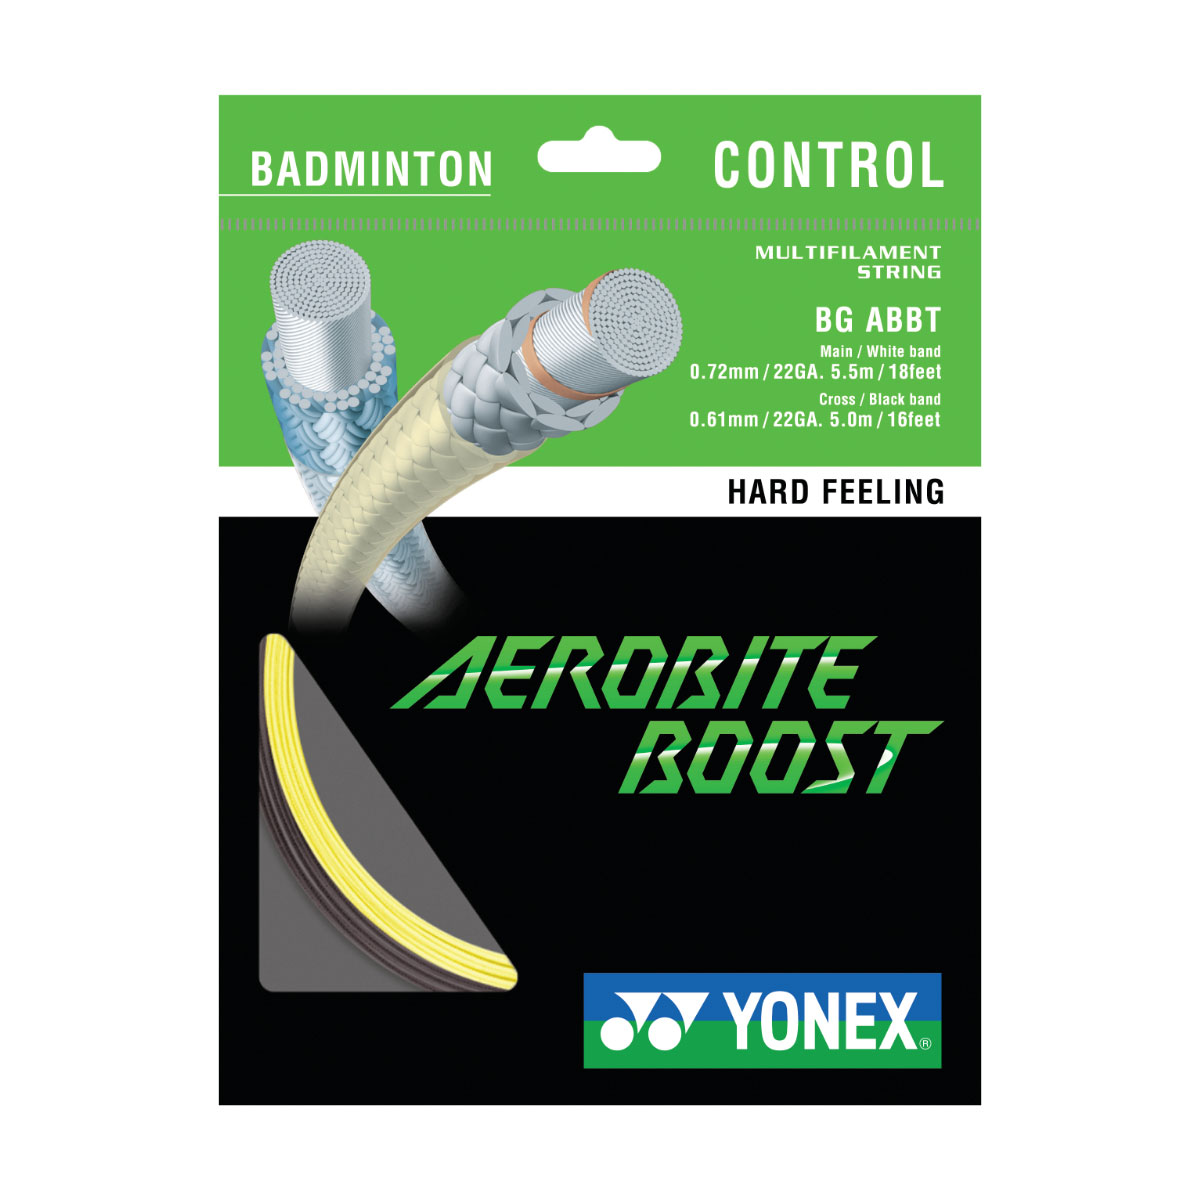 YONEX Aerobite Boost - Set